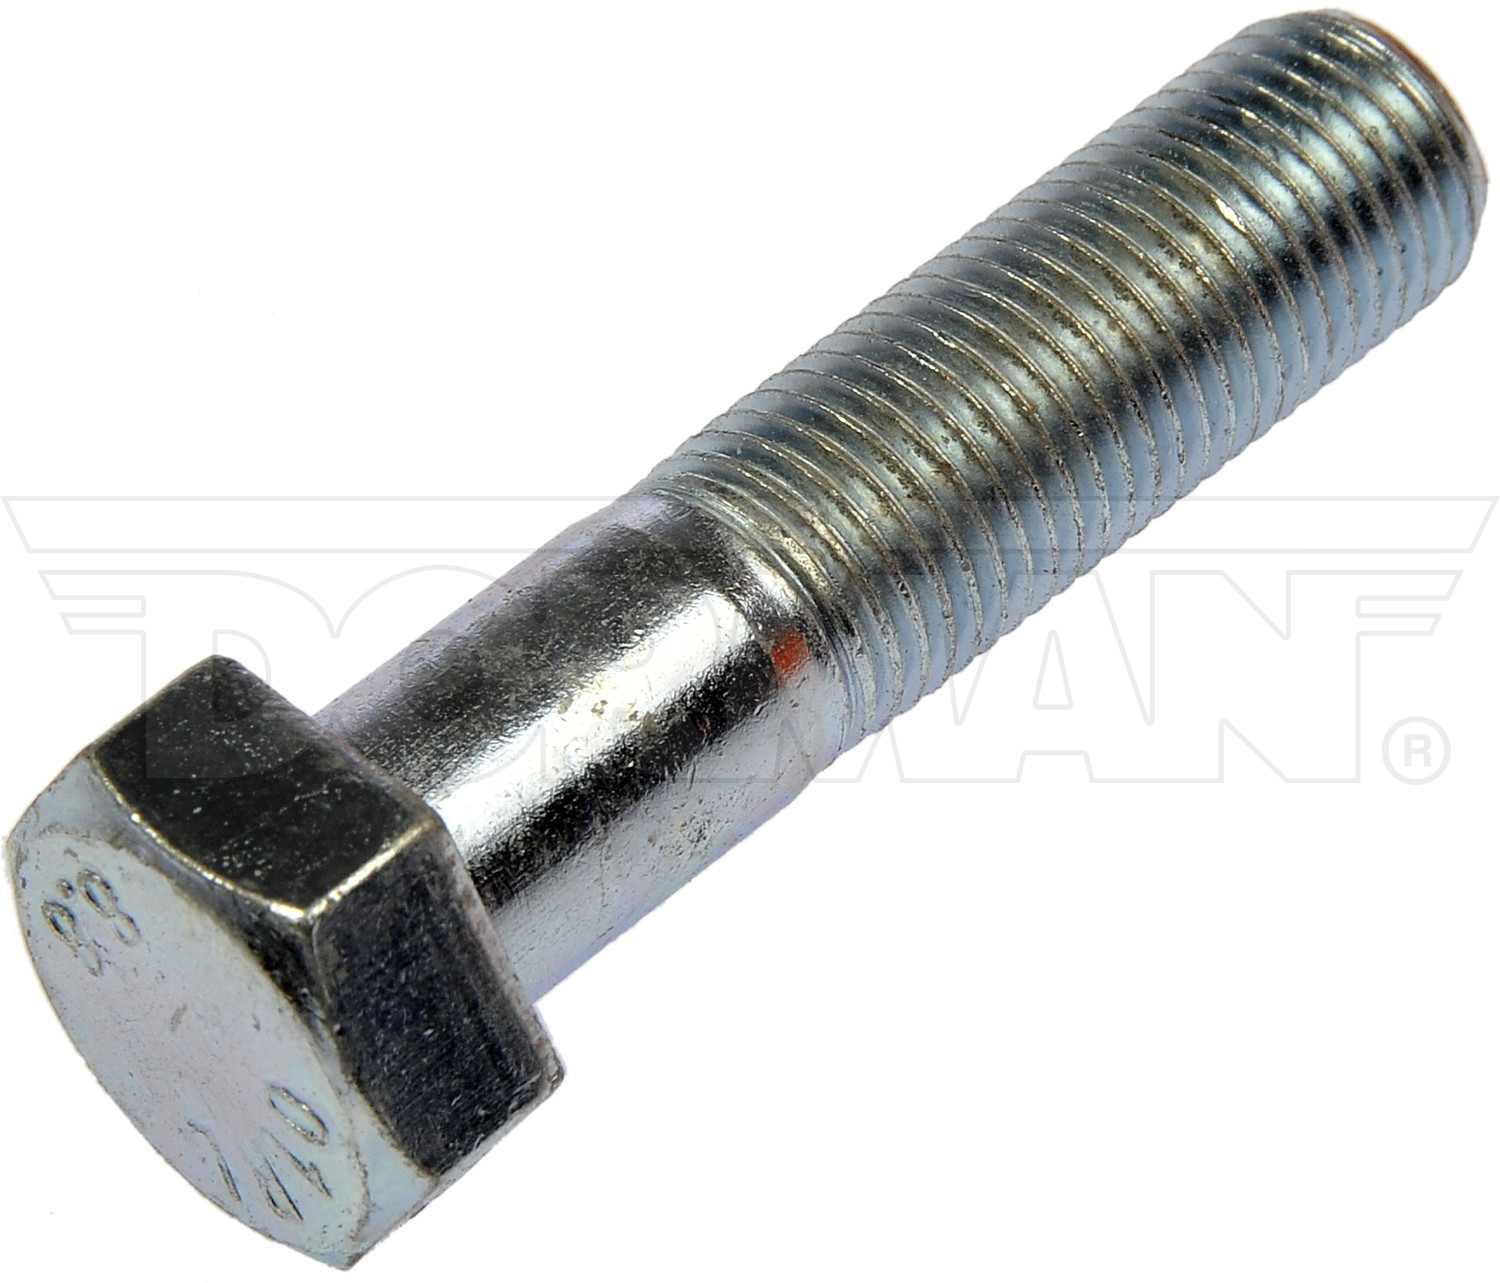 Dorman Bolts, Steel, Zinc Plated, Hex Head, 12mm x 1.25 Thread, 50mm Length,